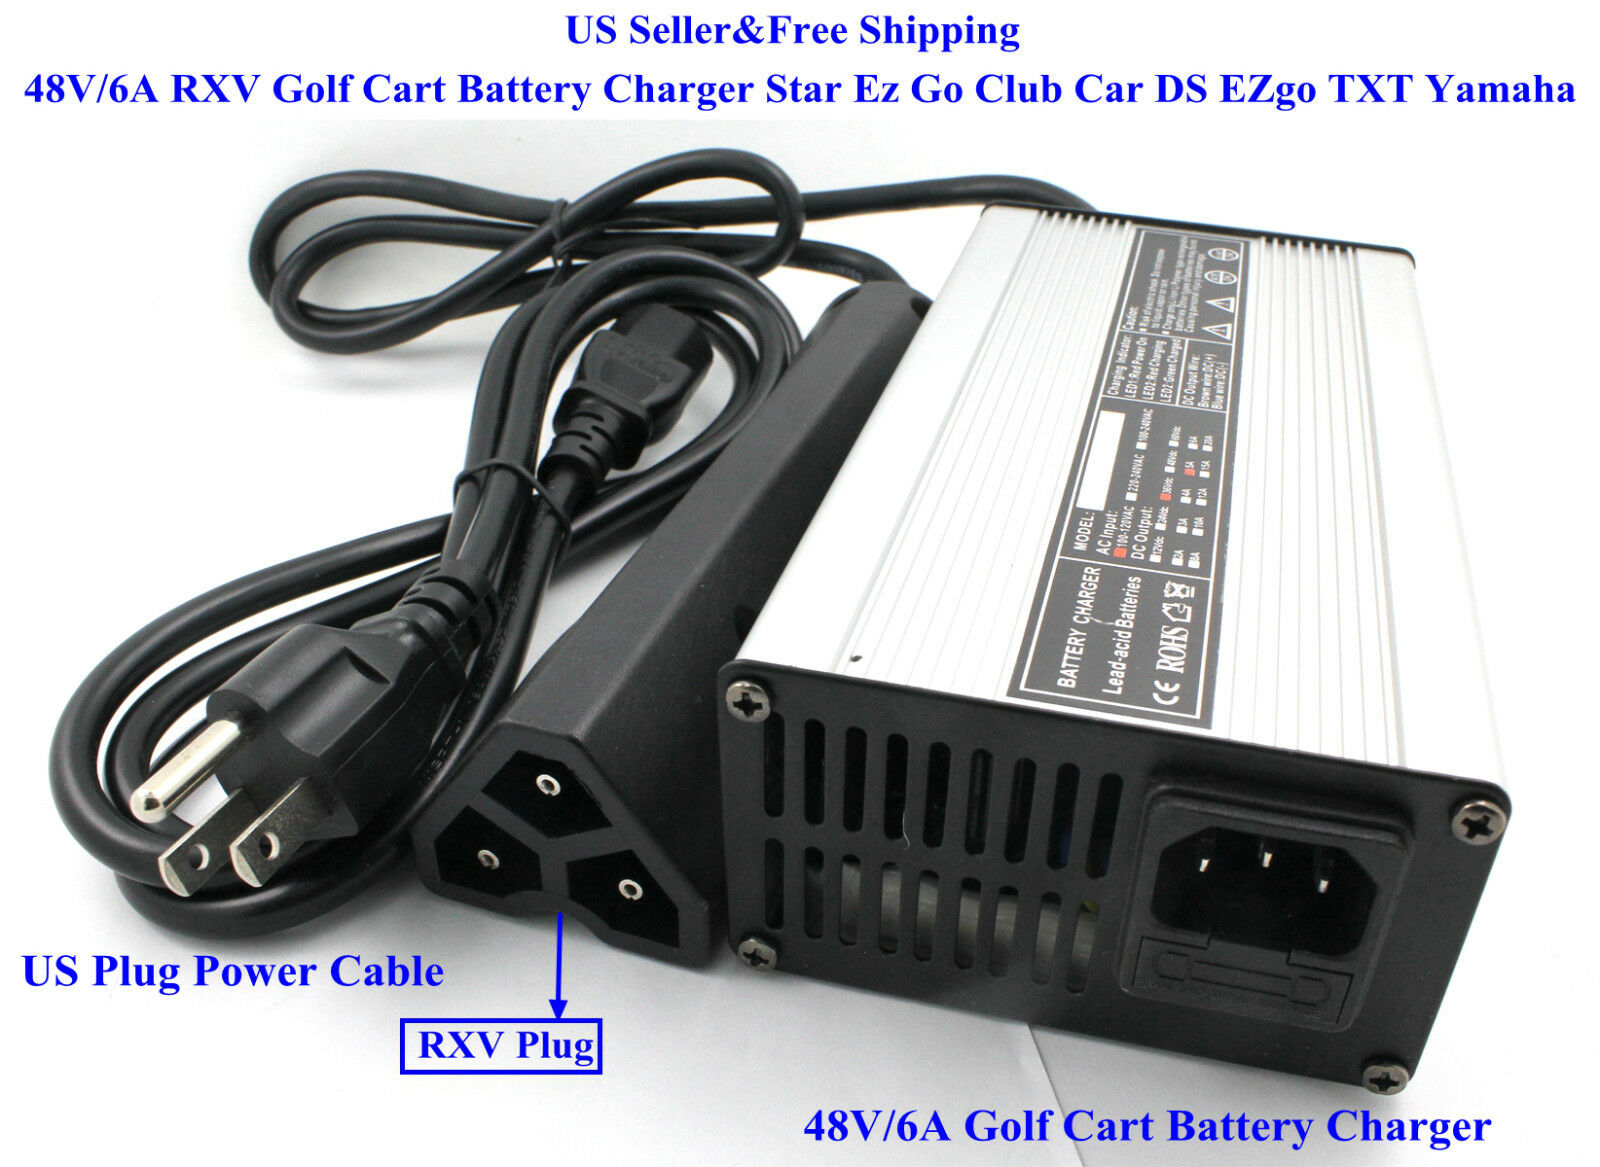 US 48V/6A RXV Golf Cart Battery Charger Star Ez Go Club Car DS EZgo TXT Yamaha